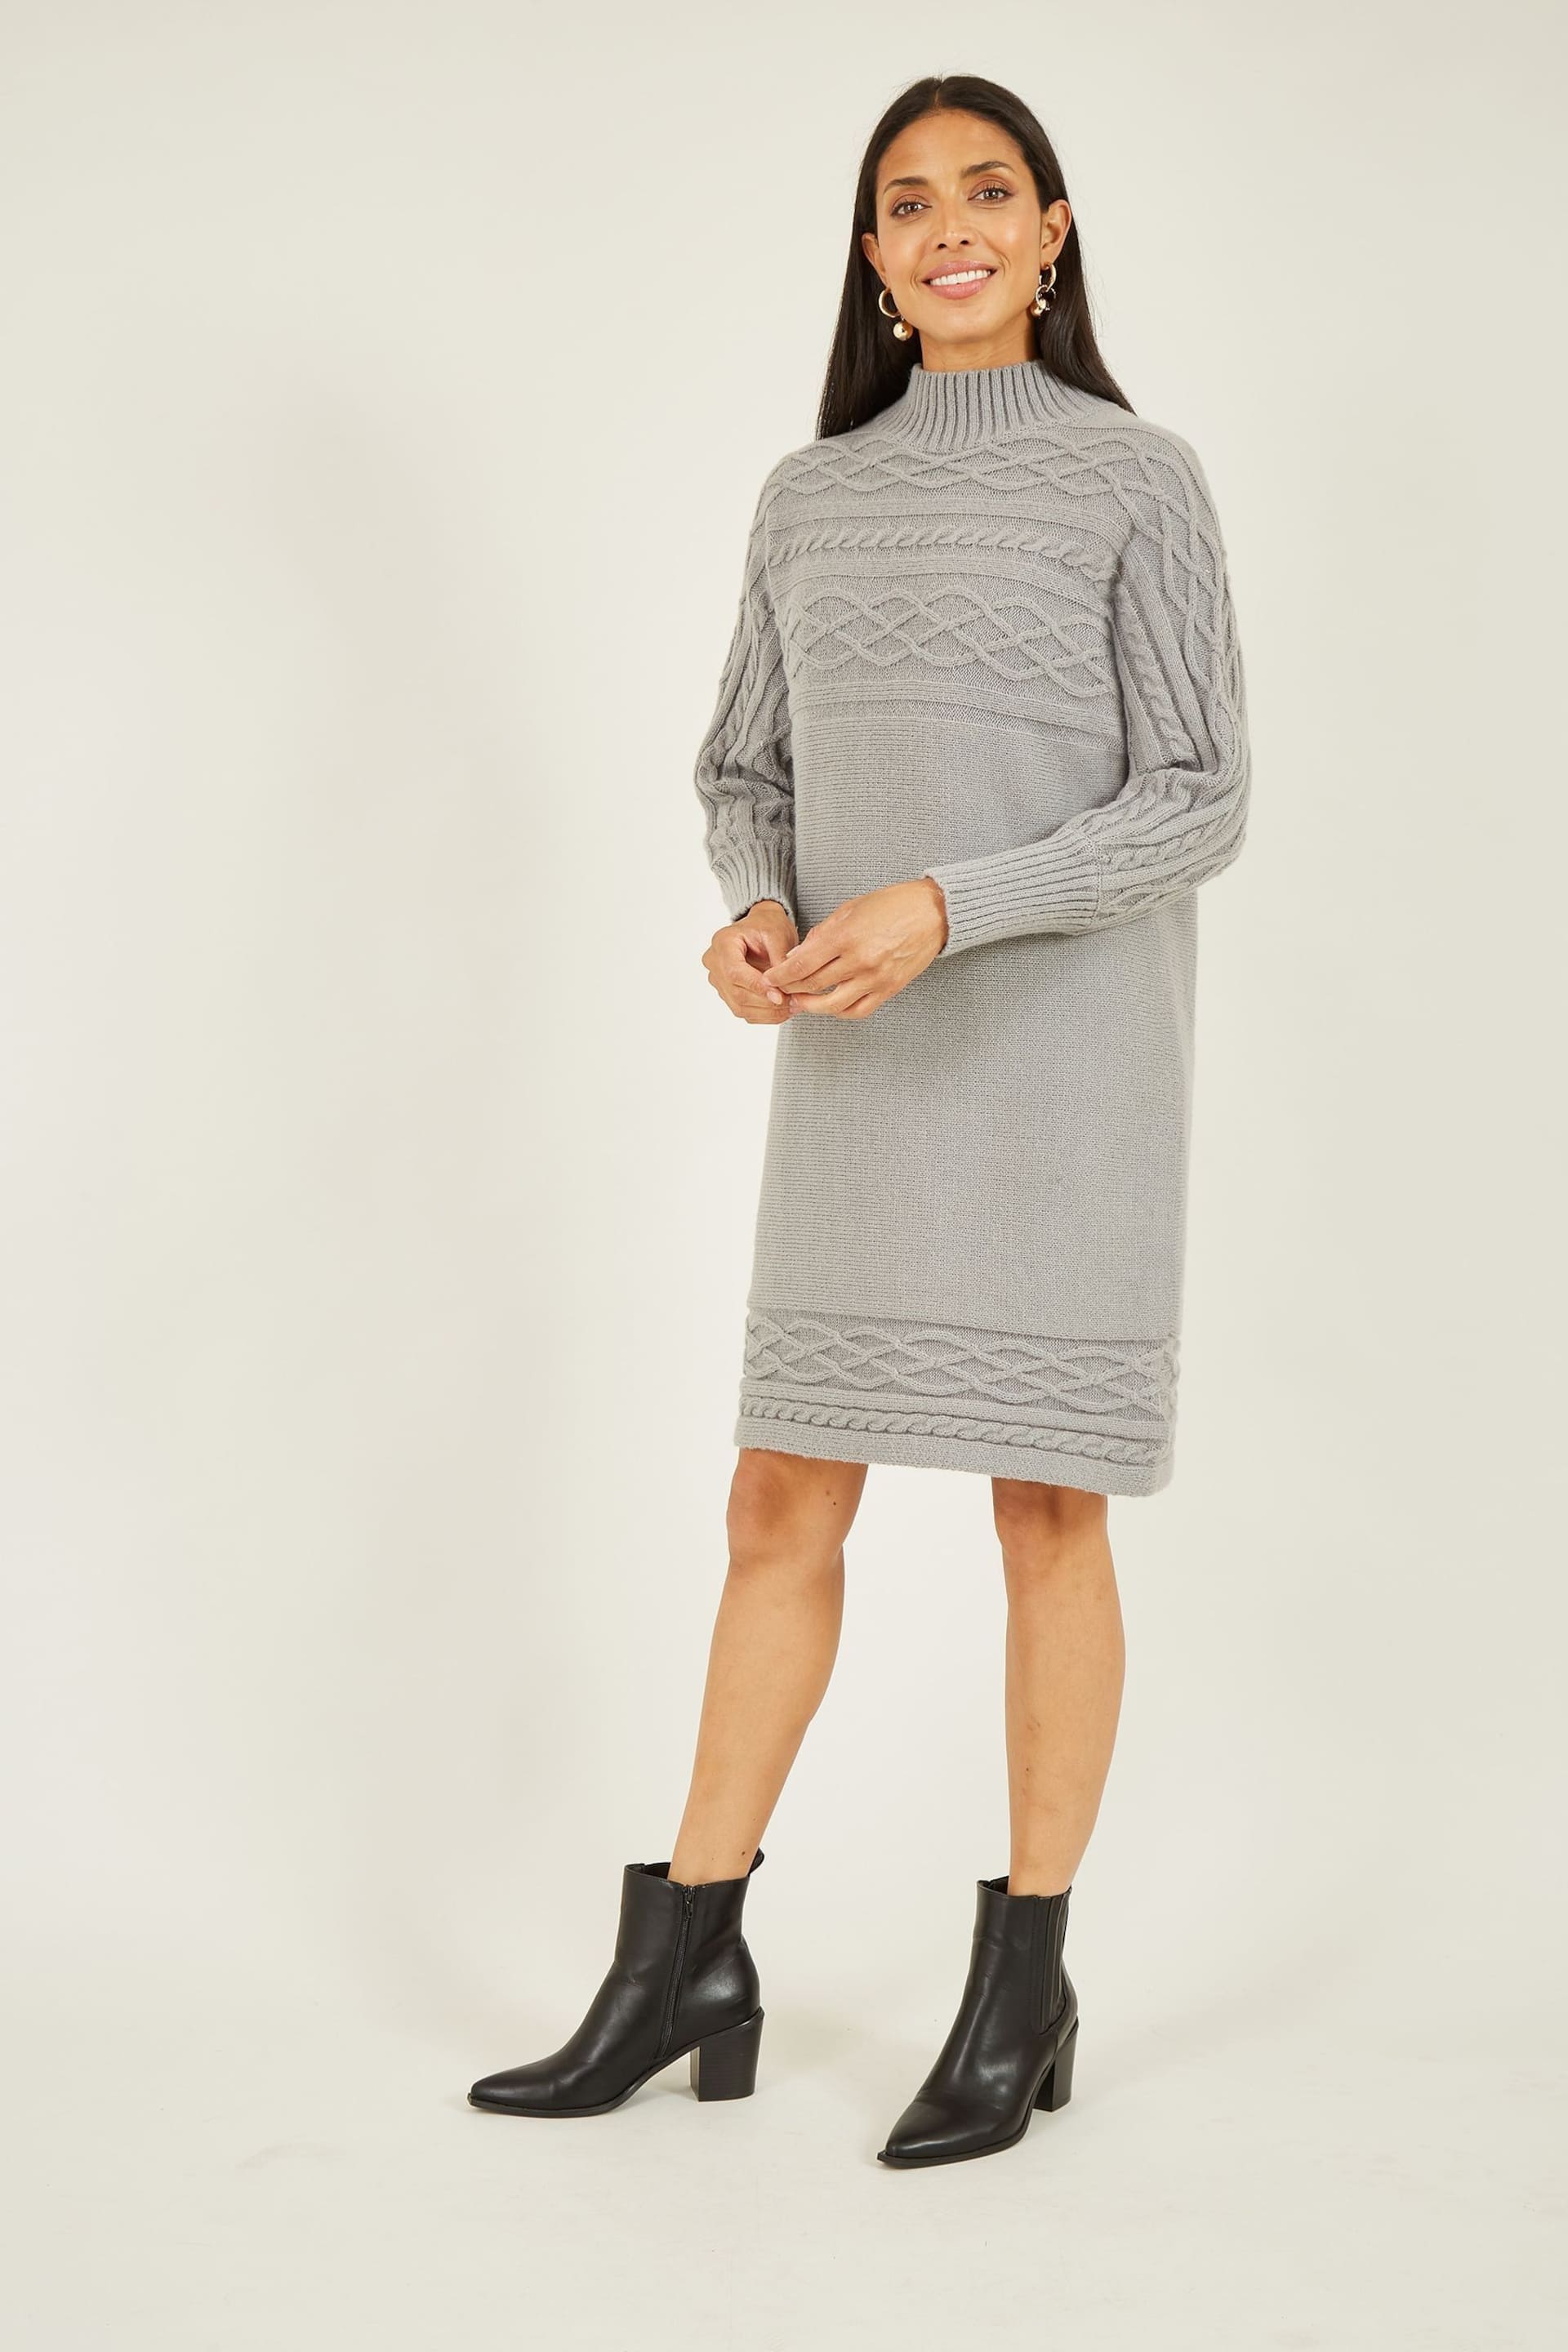 Yumi Grey Cable Knit Tunic Dress - Image 3 of 5